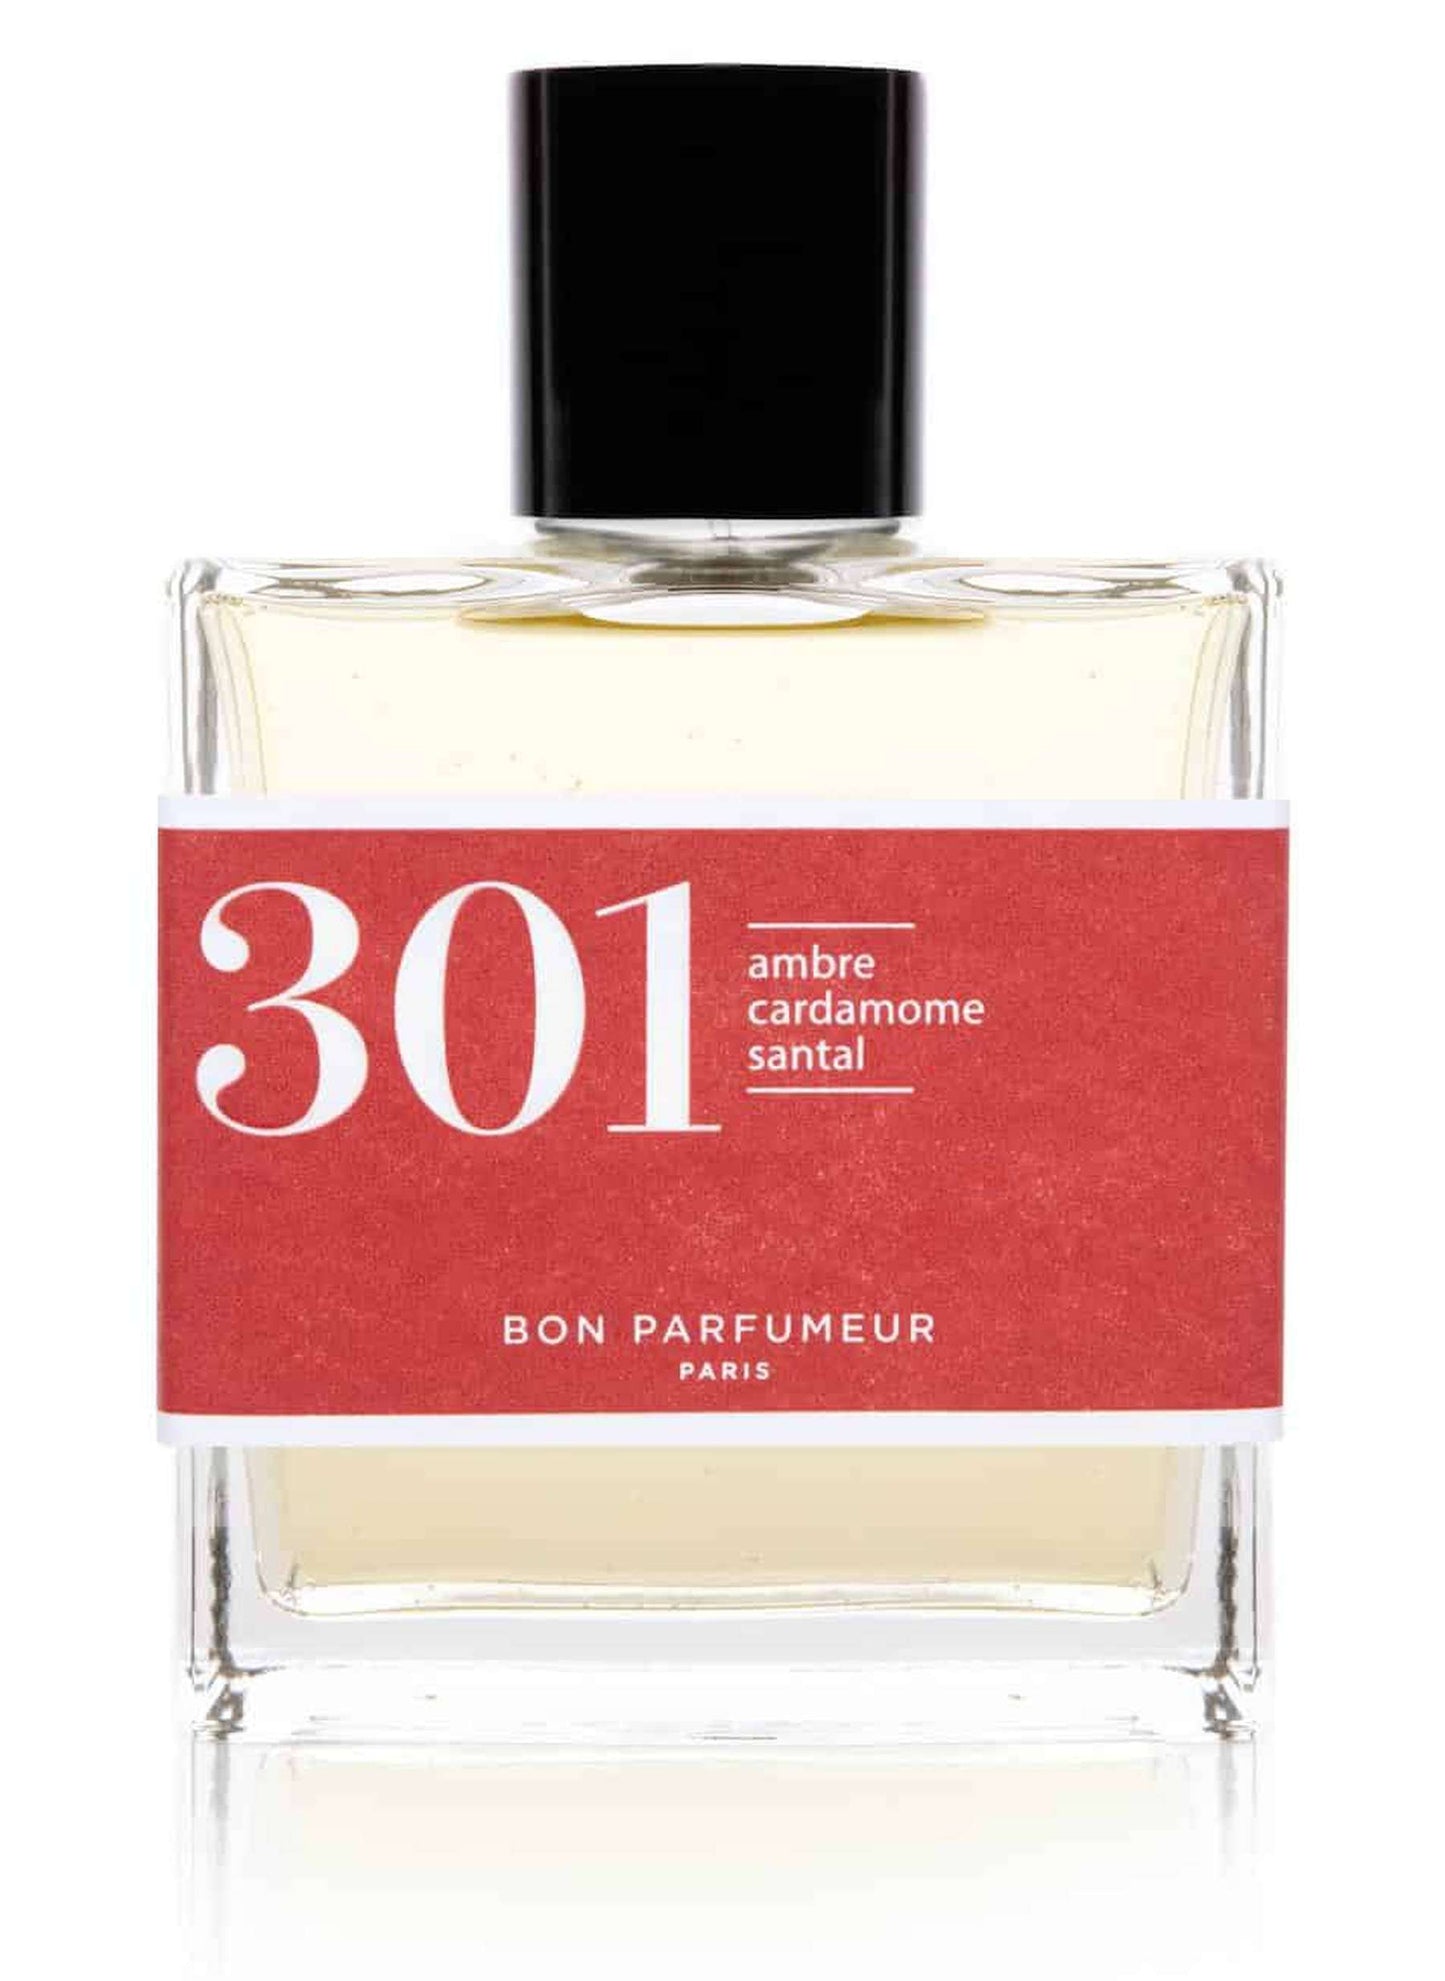 Eau de parfum 301: sandalwood, amber and cardamom